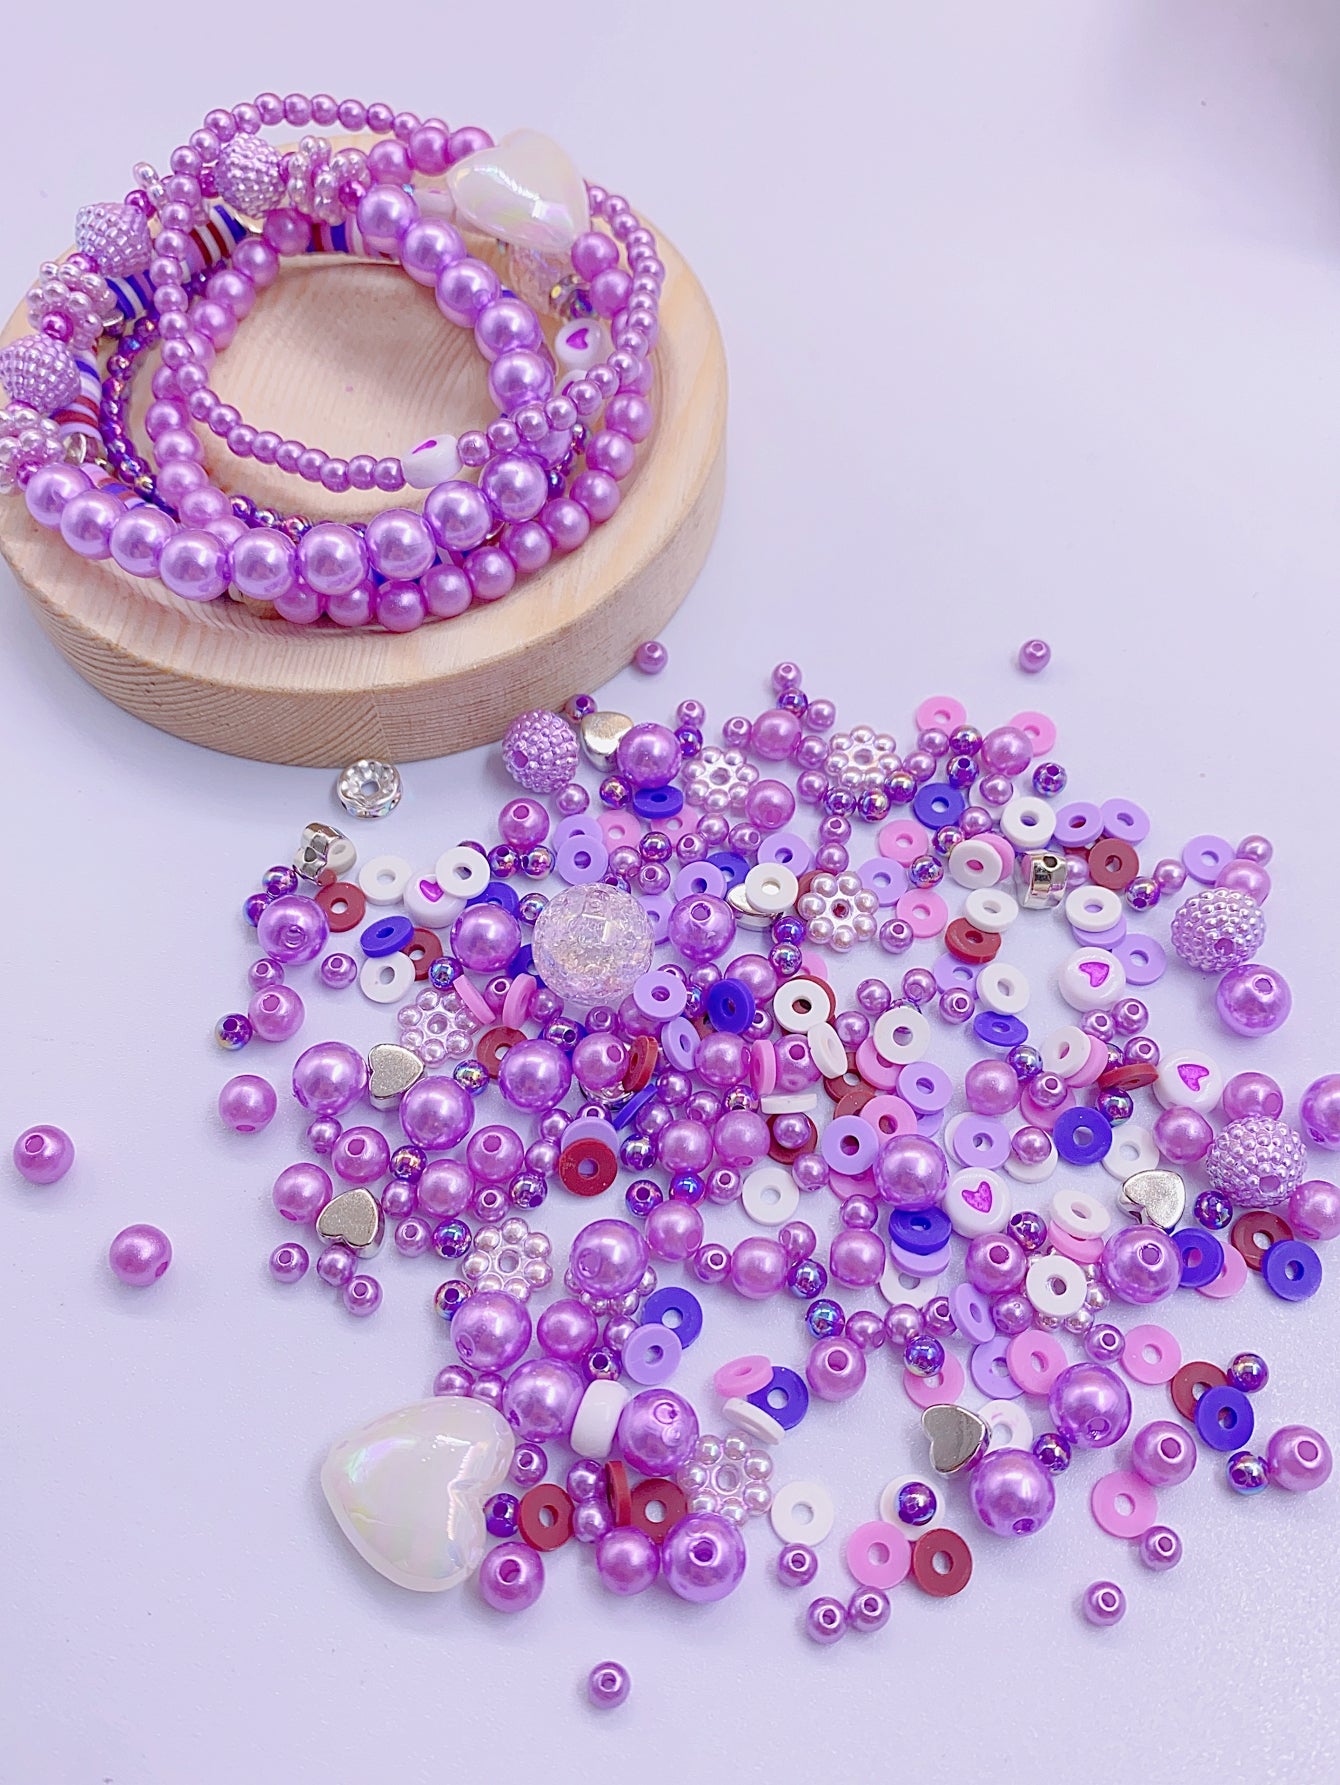 diy handmade beading material Pink colorful beads bracelet Hair tie Loose beads jewelry accessories Bead material bag